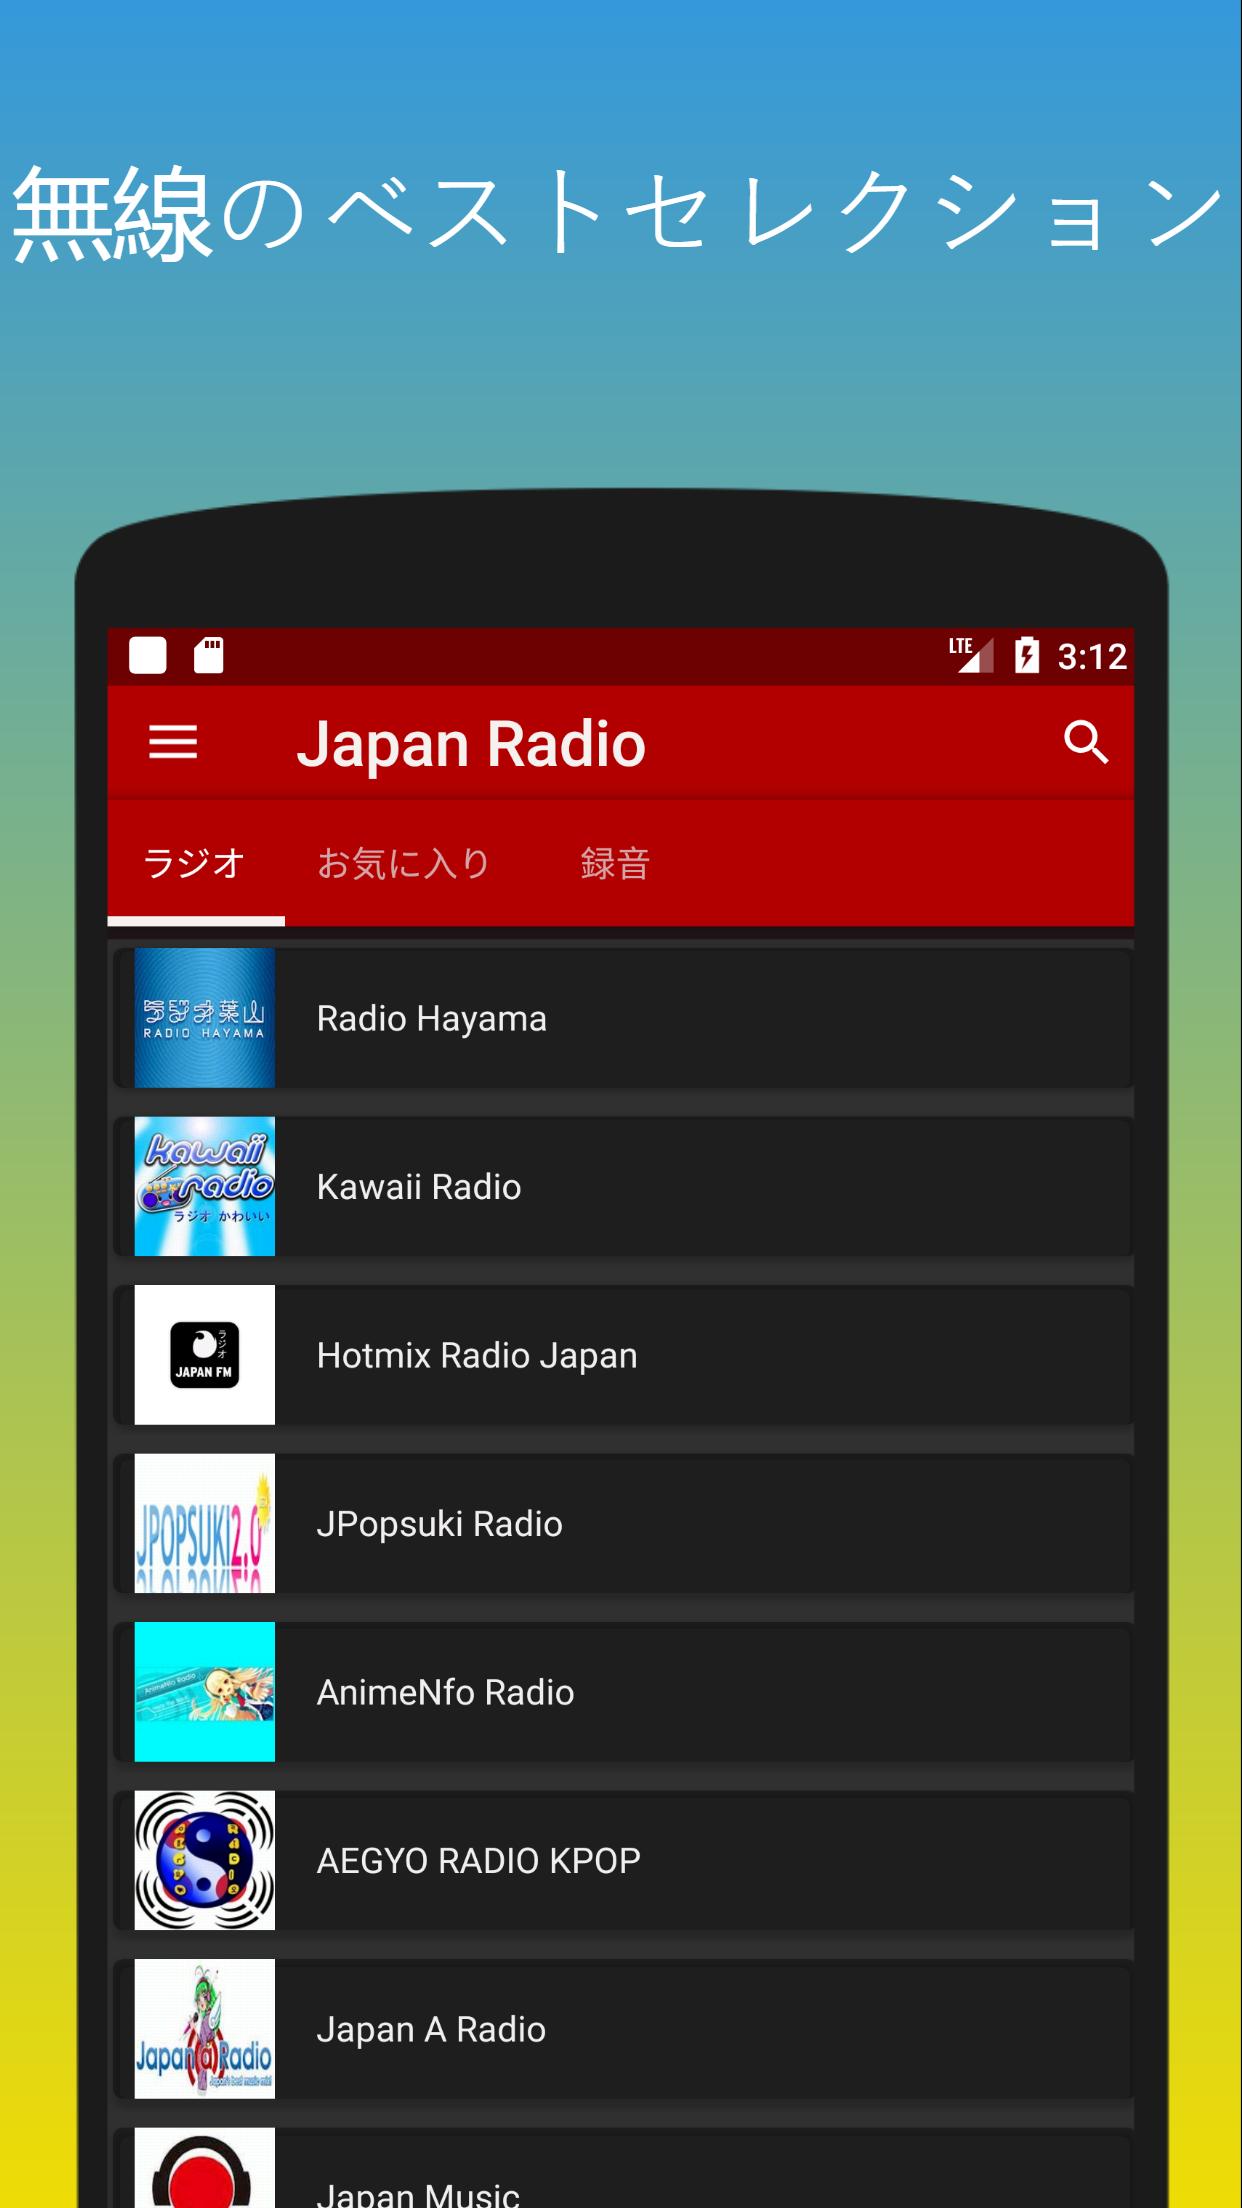 Radio fm Japan online - listen to Japanese radio APK voor Android Download